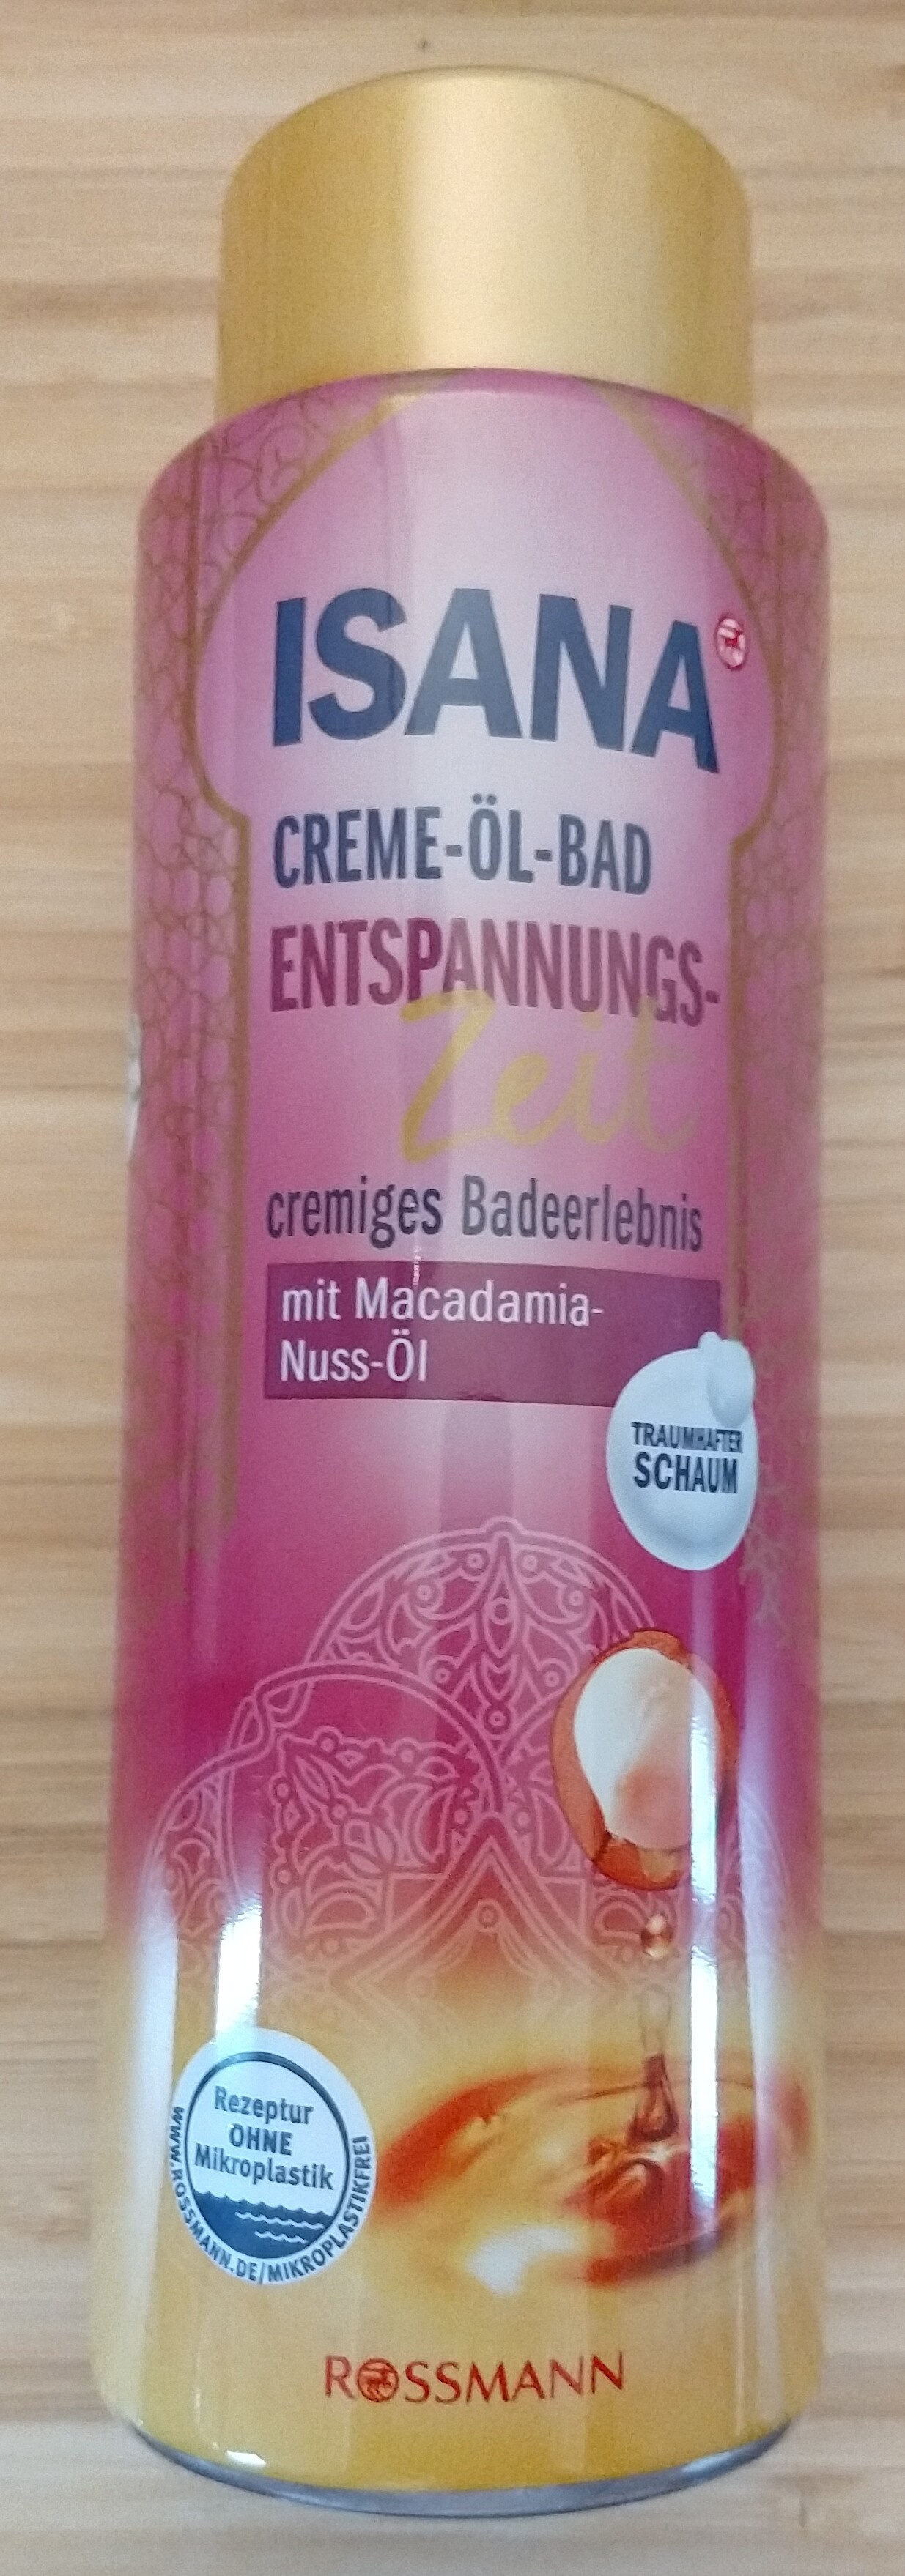 CREME-ÖL-BAD ENTSPANNUNGS-Zeit cremiges Badeerlebnis mit Macadamia-Nuss-Öl - Product - de